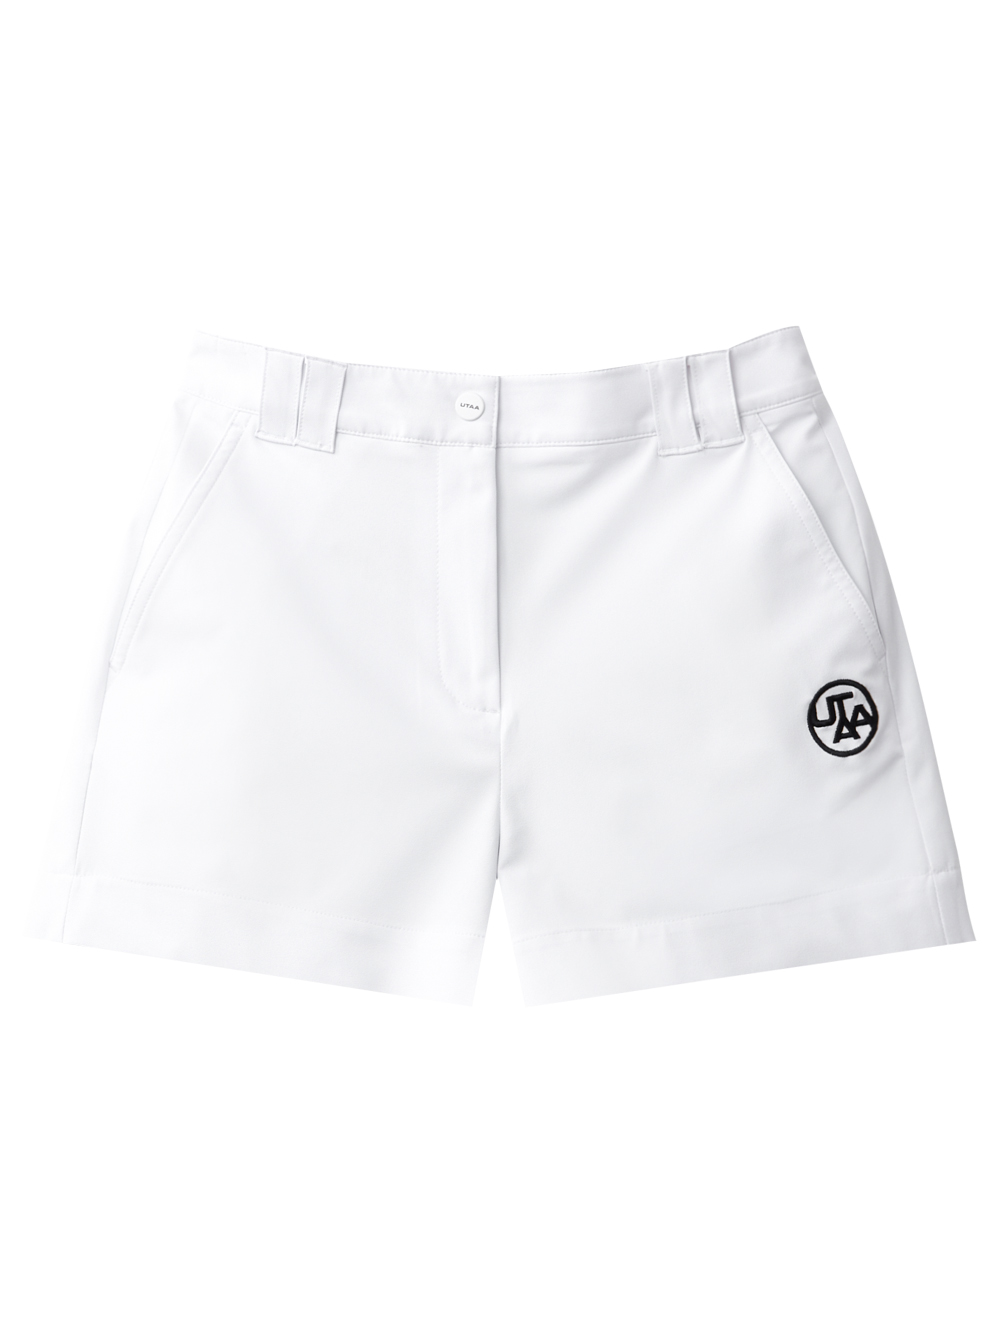 UTAA E-band Short Pants : White  (UC2PSF424WH)